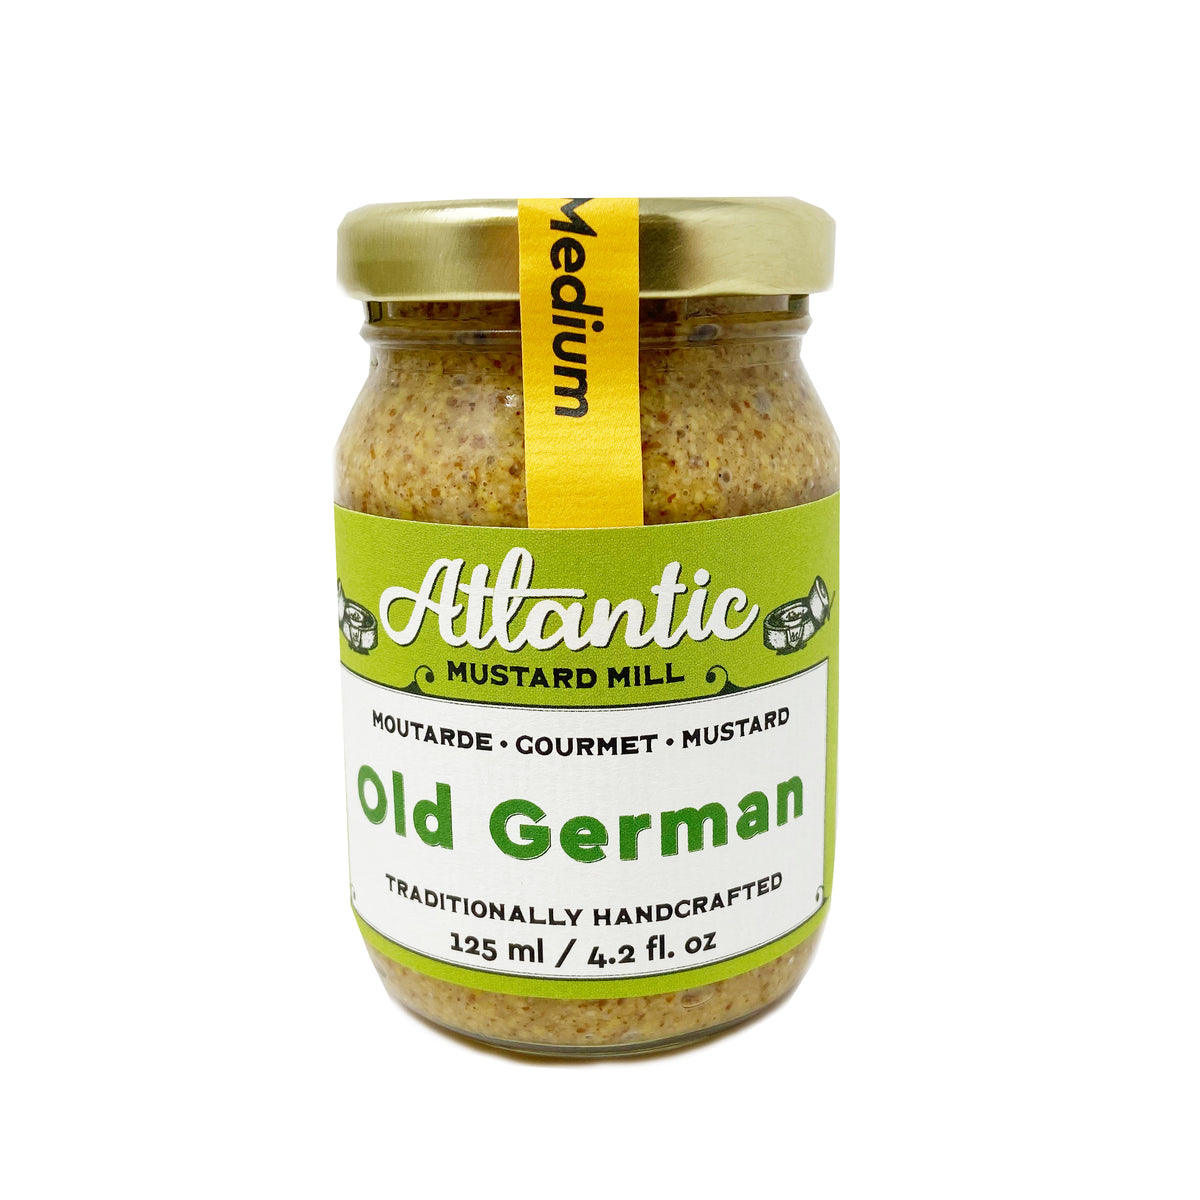 GERMAN MUSTARD - Finest 100% original German Foods